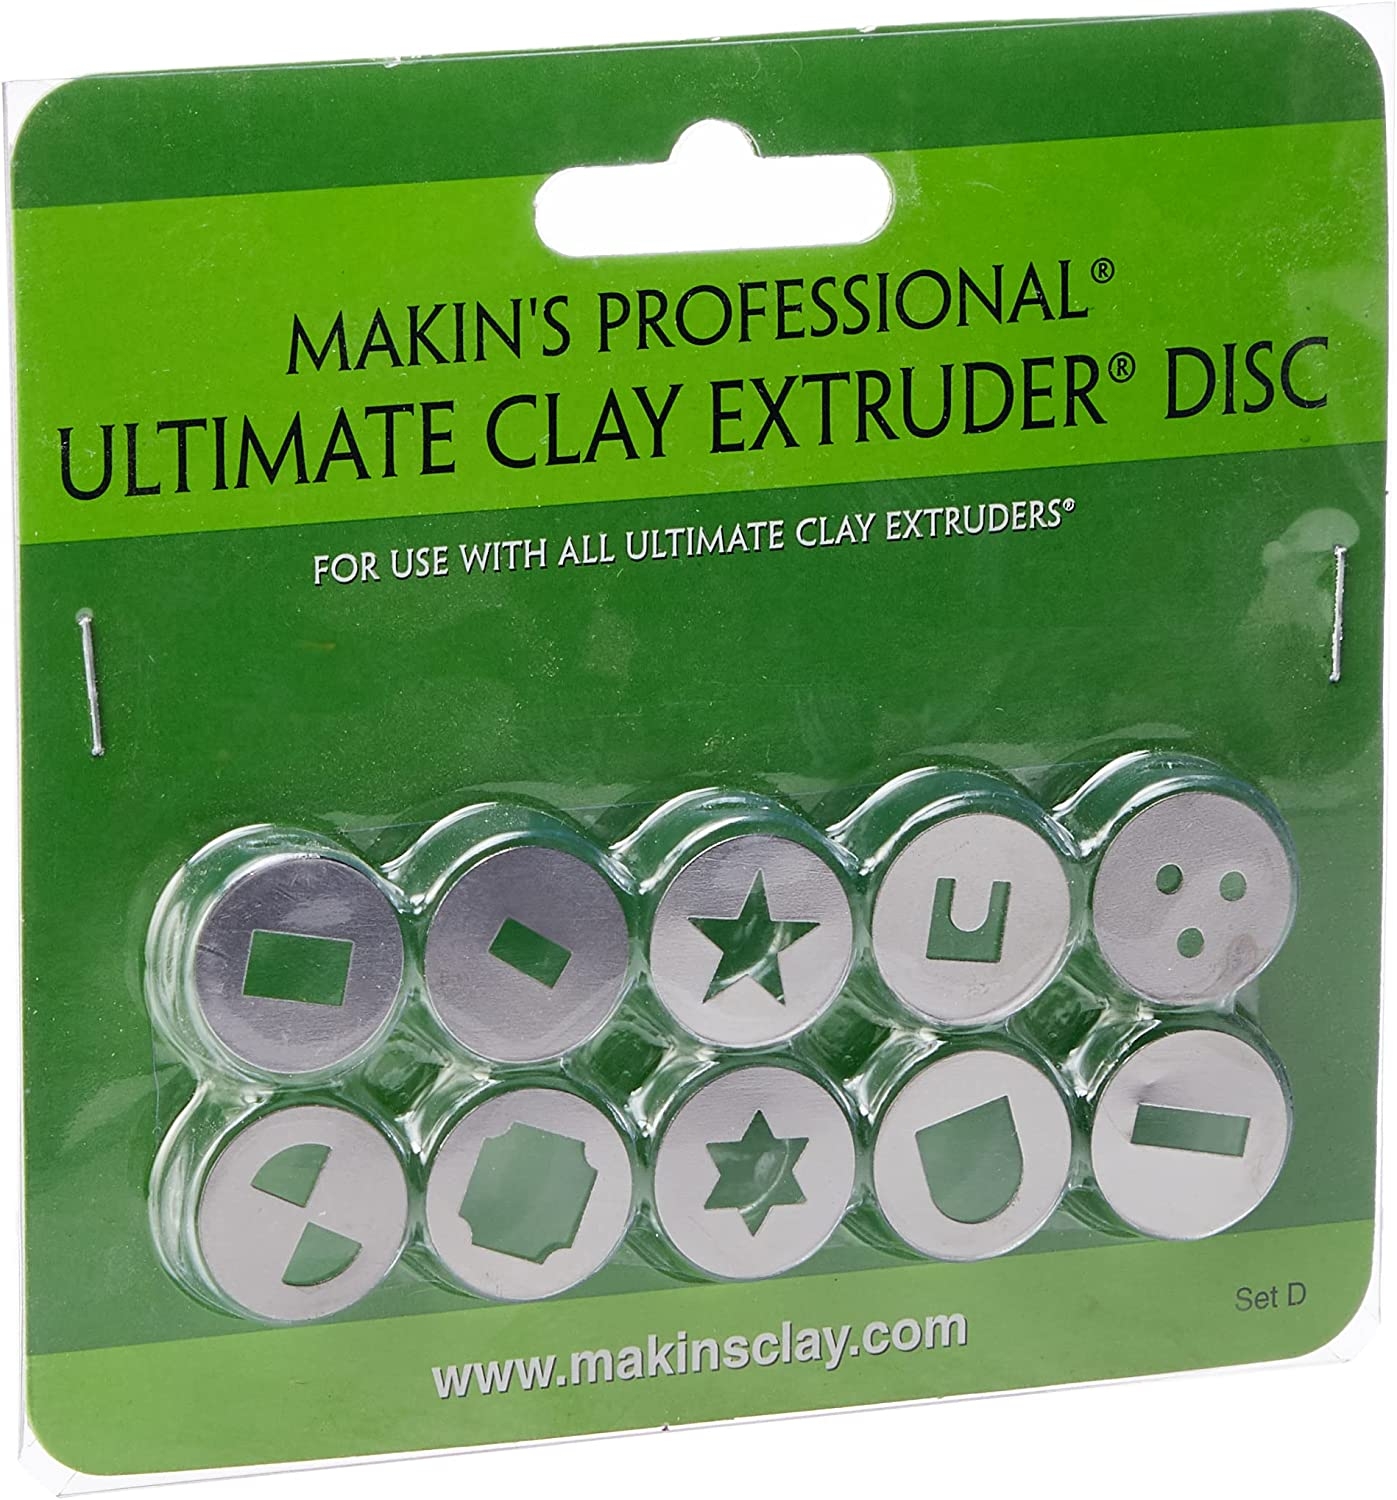 Makin’s Professional Ultimate Clay Extruder Discs 10/Pkg, Set D Import To Shop ×Product customization General Description